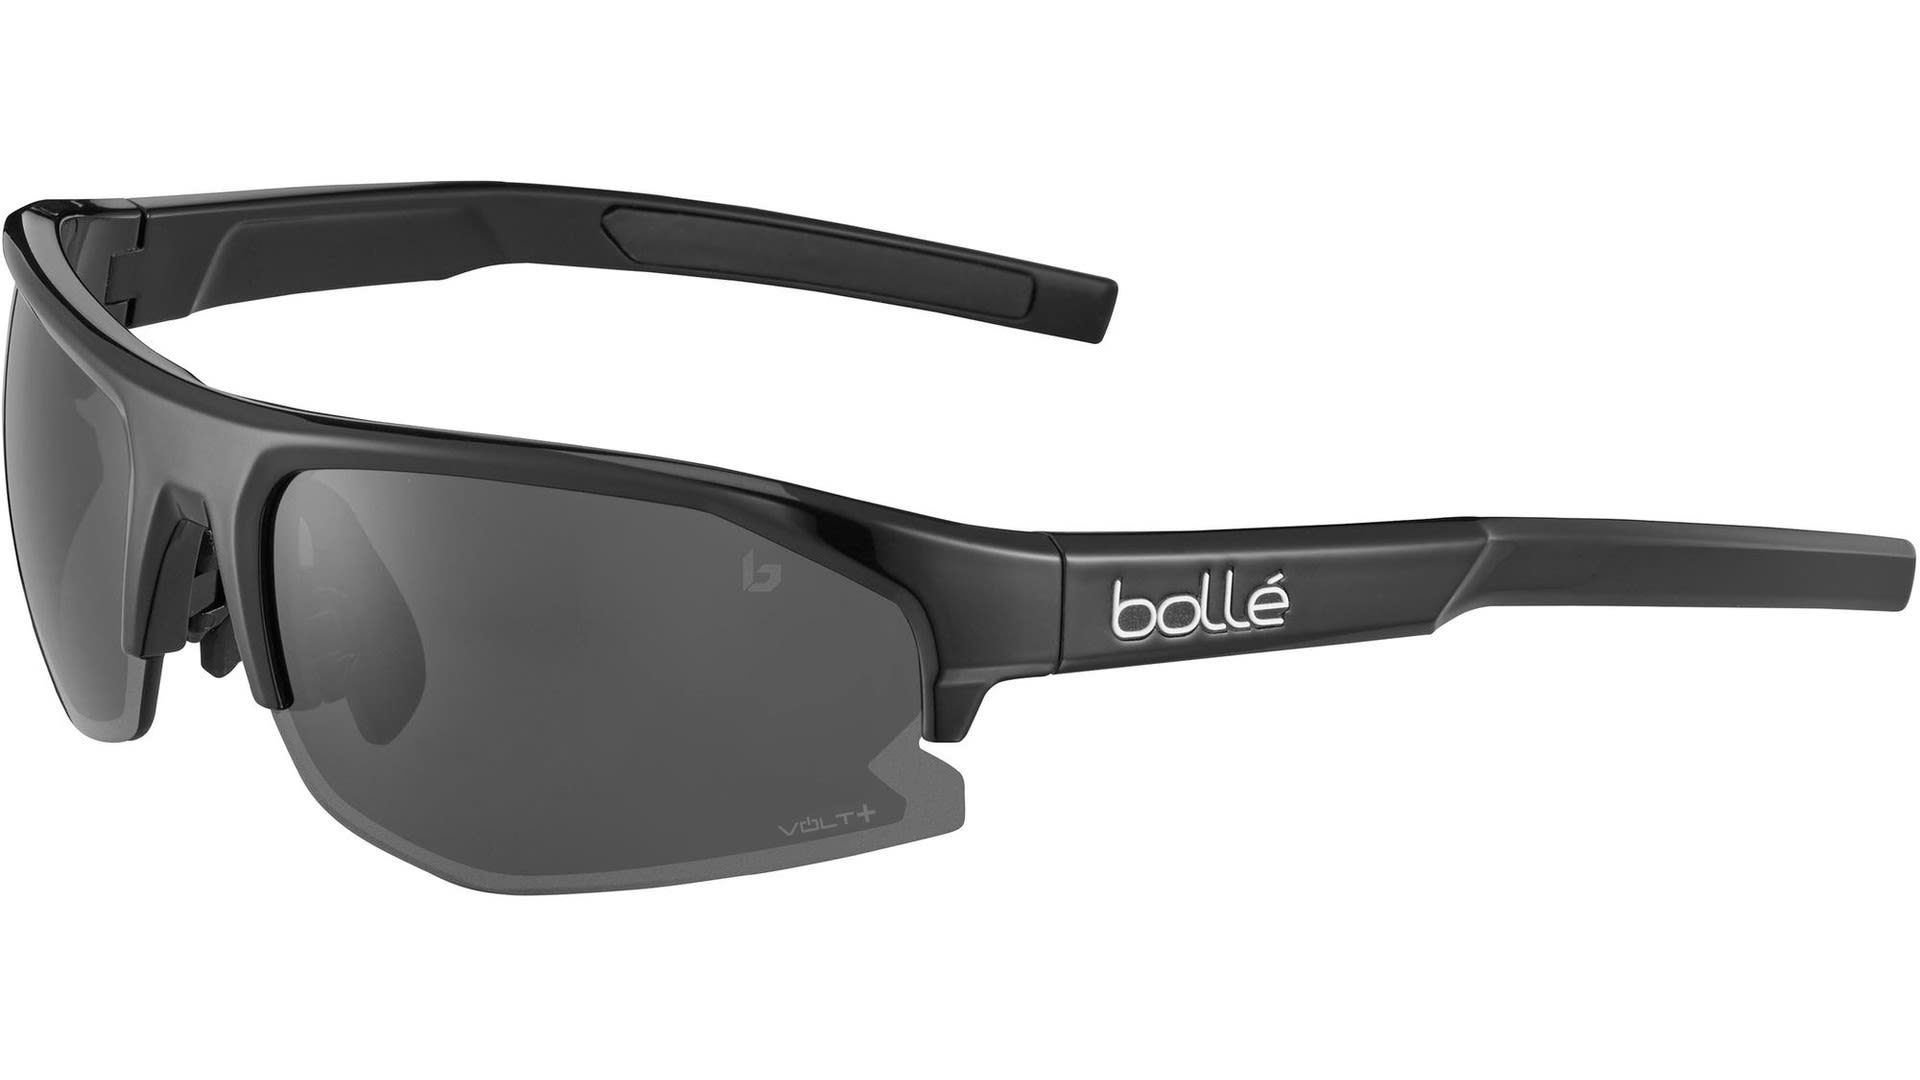 Bolle S Bolle Classic 2.0 Sportbrille Bolt Accessoires